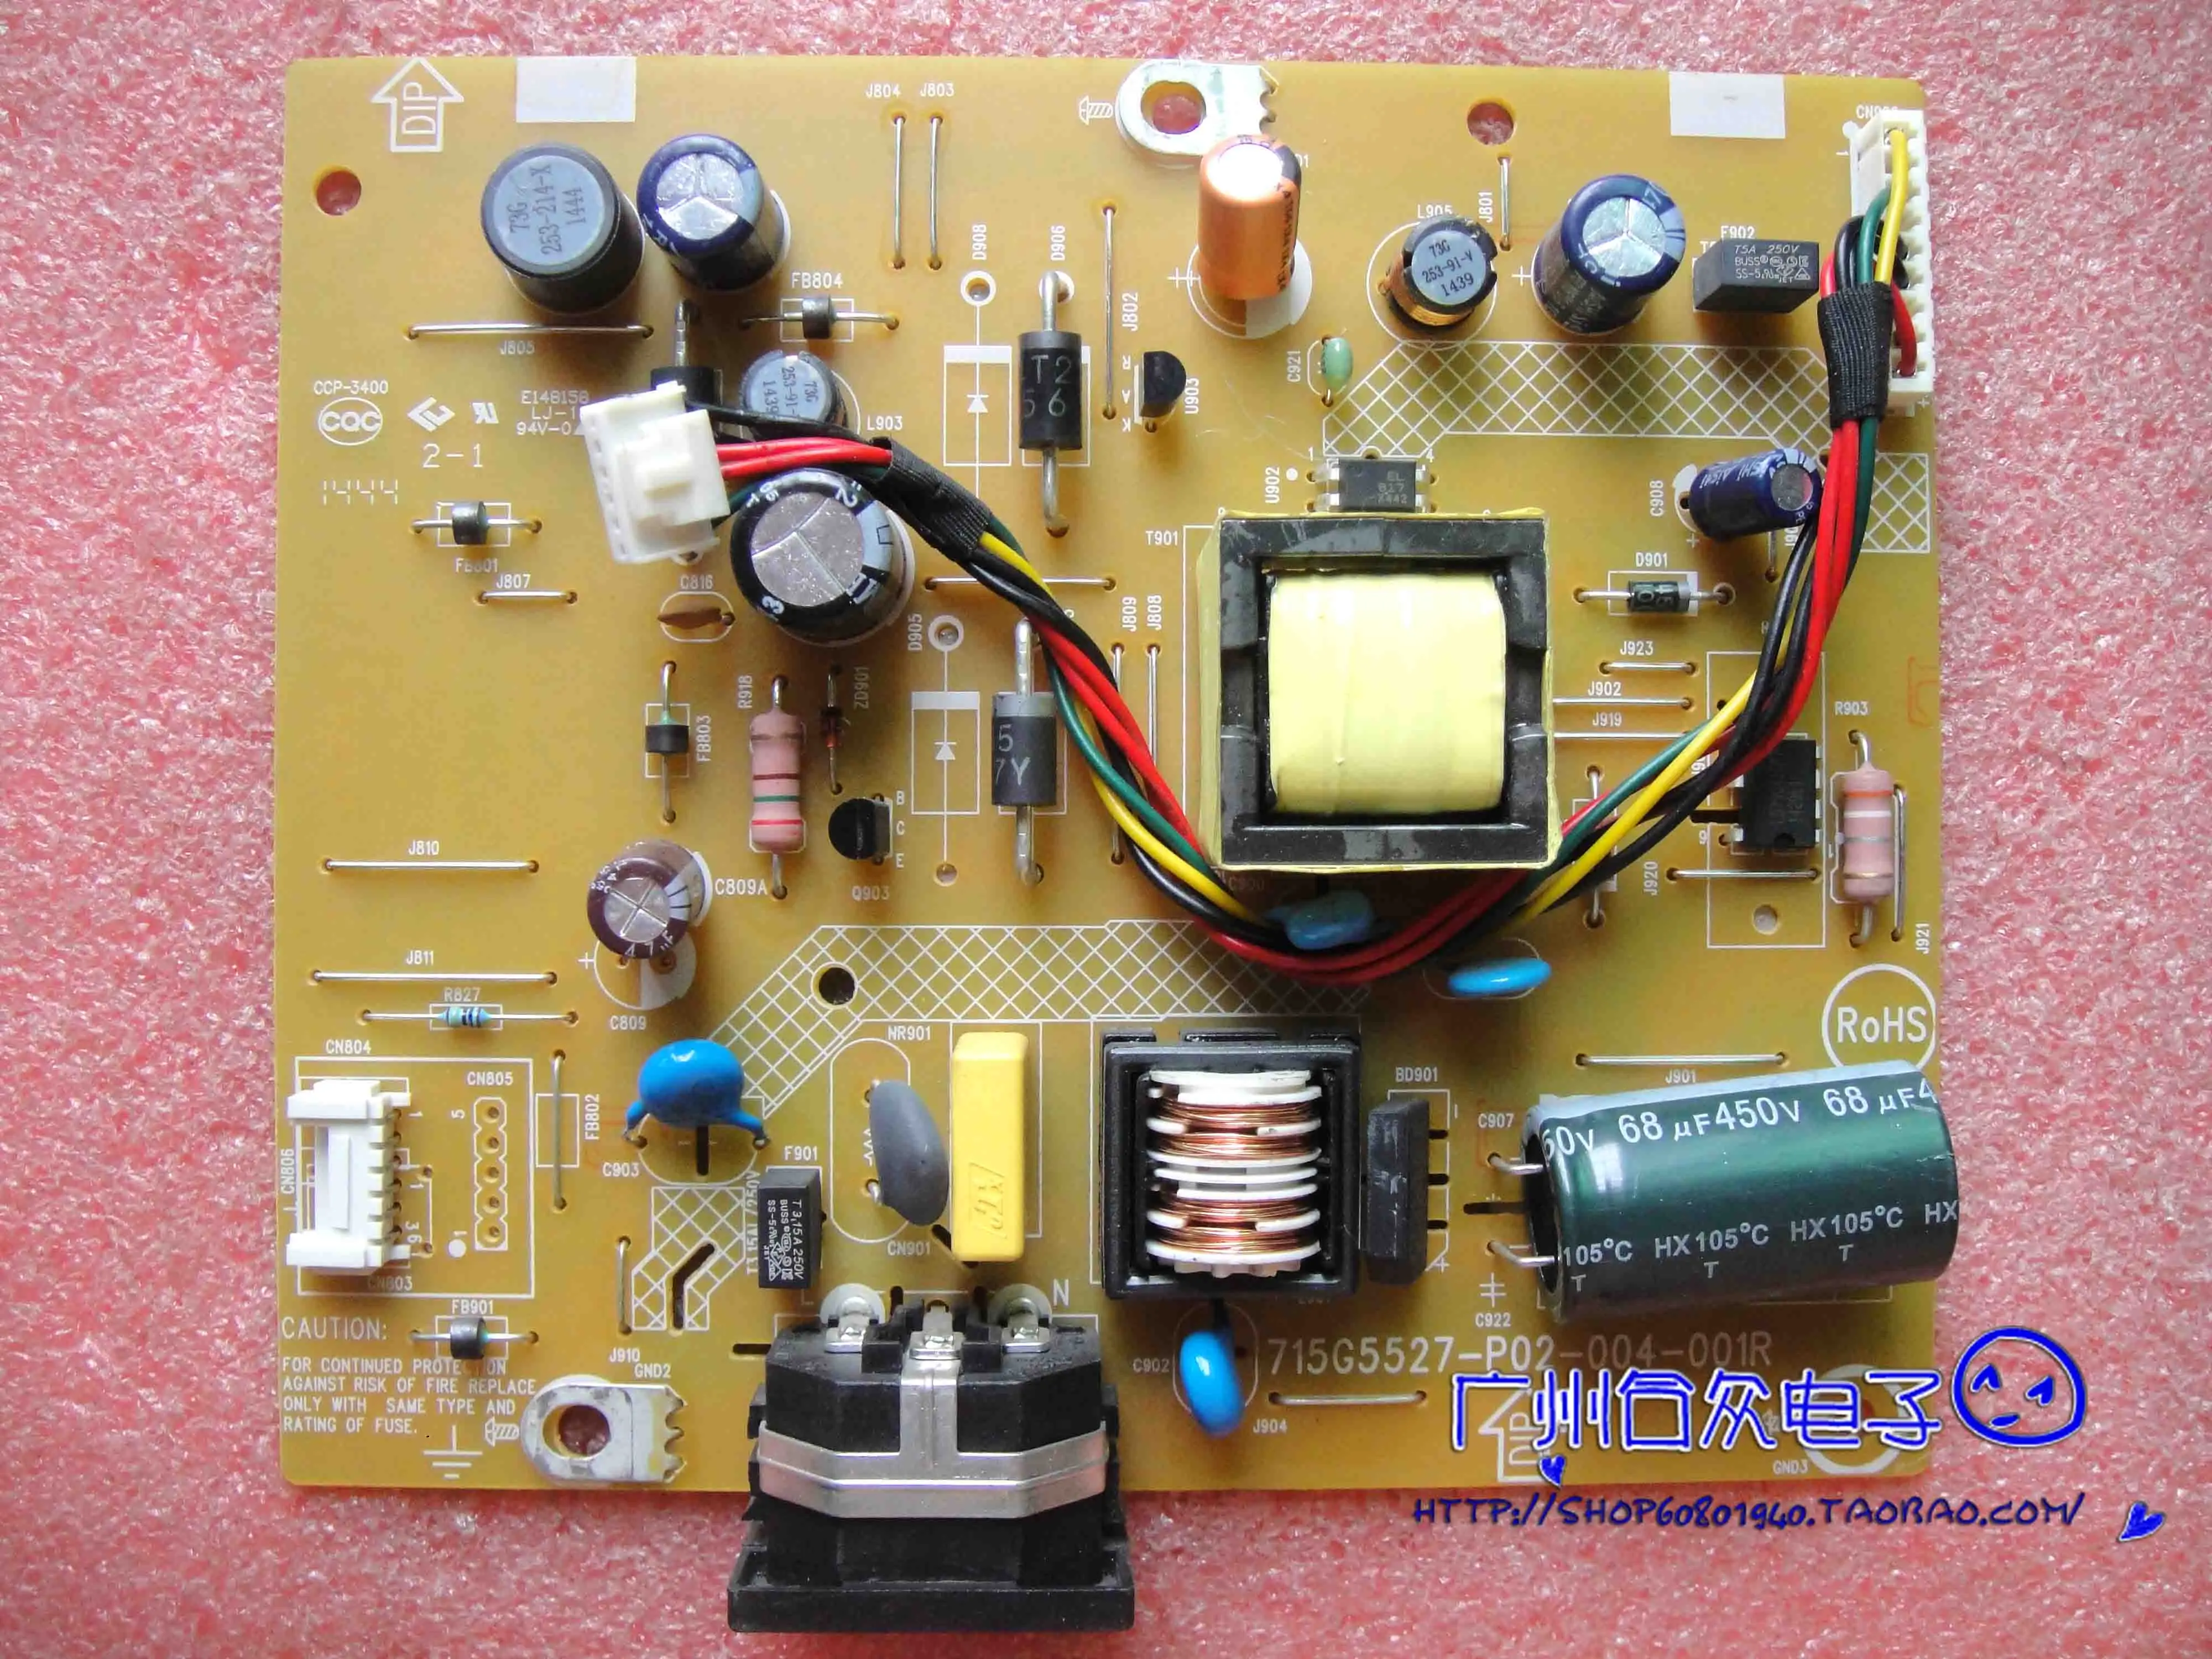 

F2014A Power Board High Voltage Board 715G5527-P02-004-001R